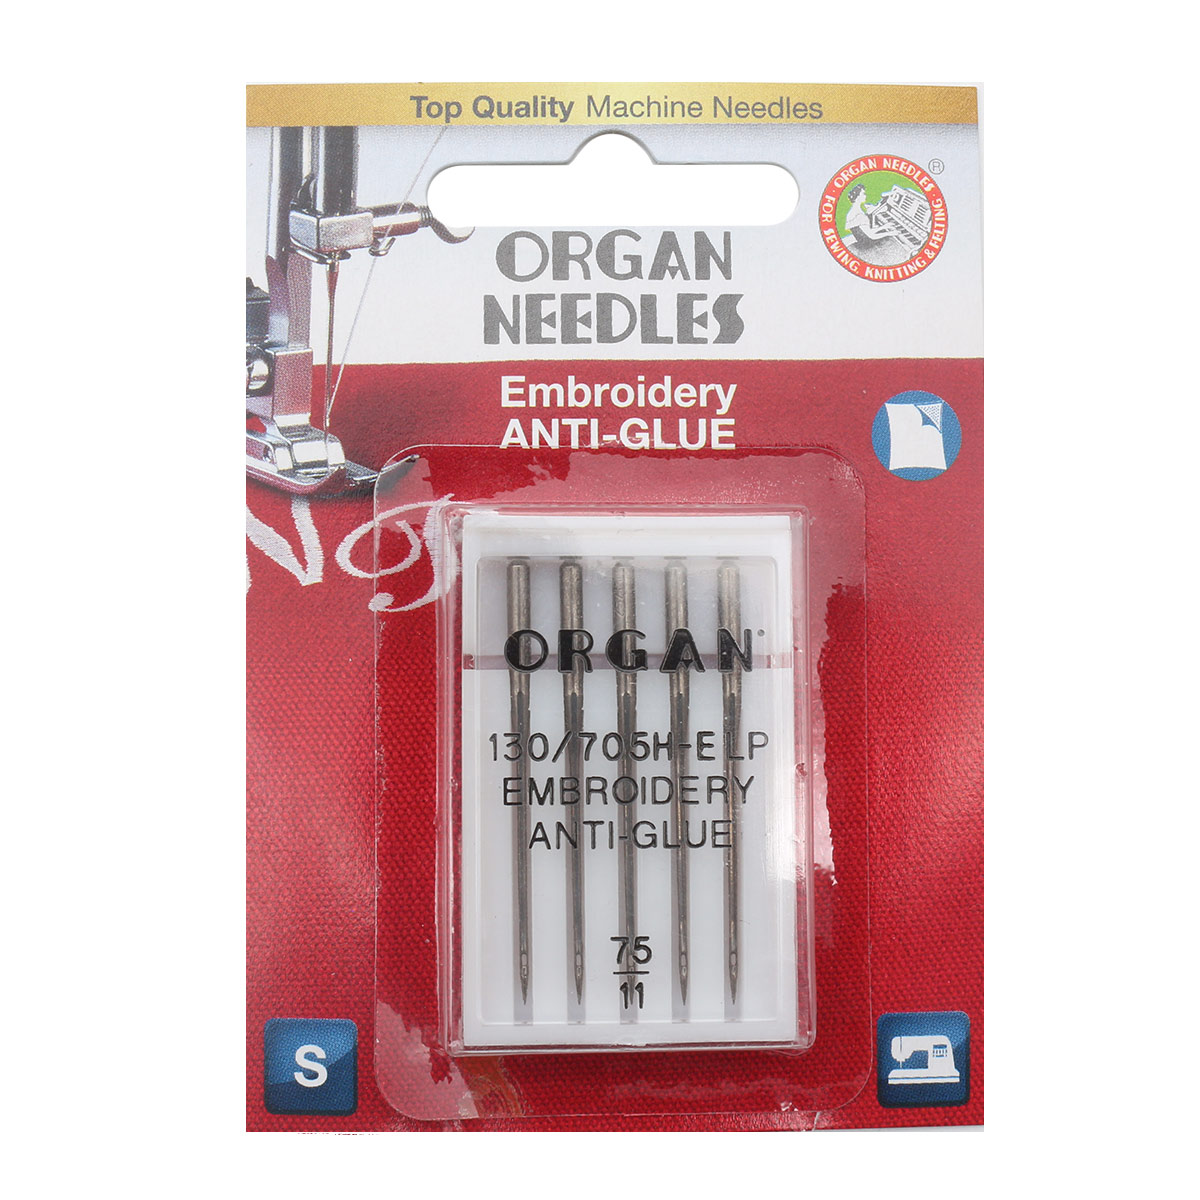 ORGAN иглы вышивальные Anti-Glue 5/75 Blister organ иглы вышивальные anti glue 5 75 blister